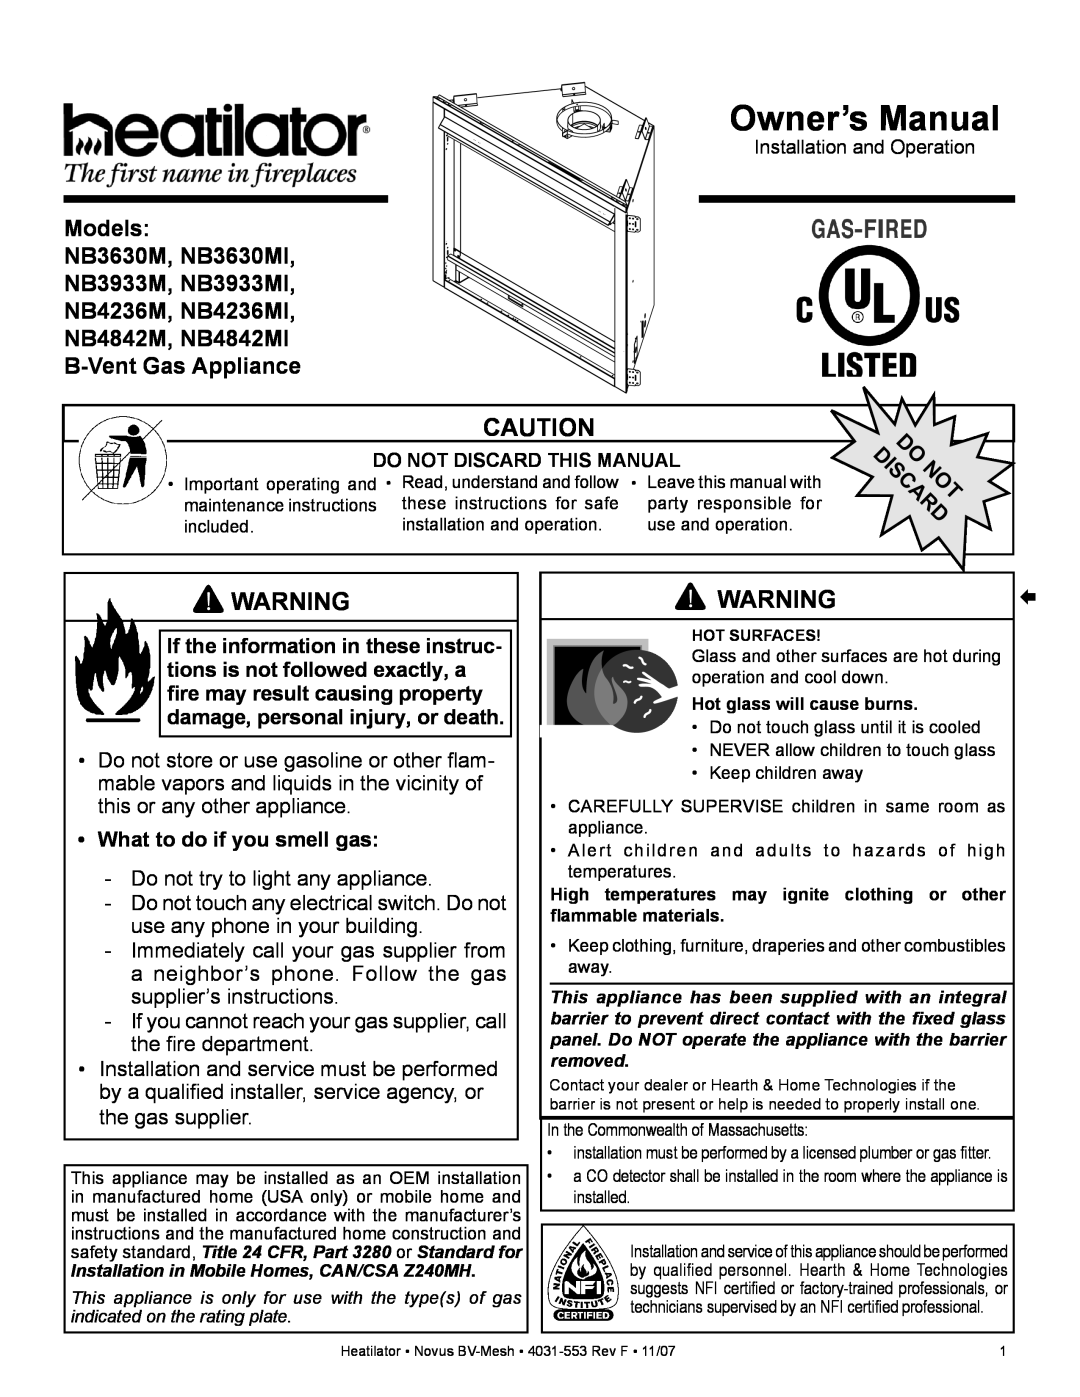 Heatiator NB4236MI, NB4842MI owner manual What to do if you smell gas, Models NB3630M, NB3630MI NB3933M, NB3933MI 